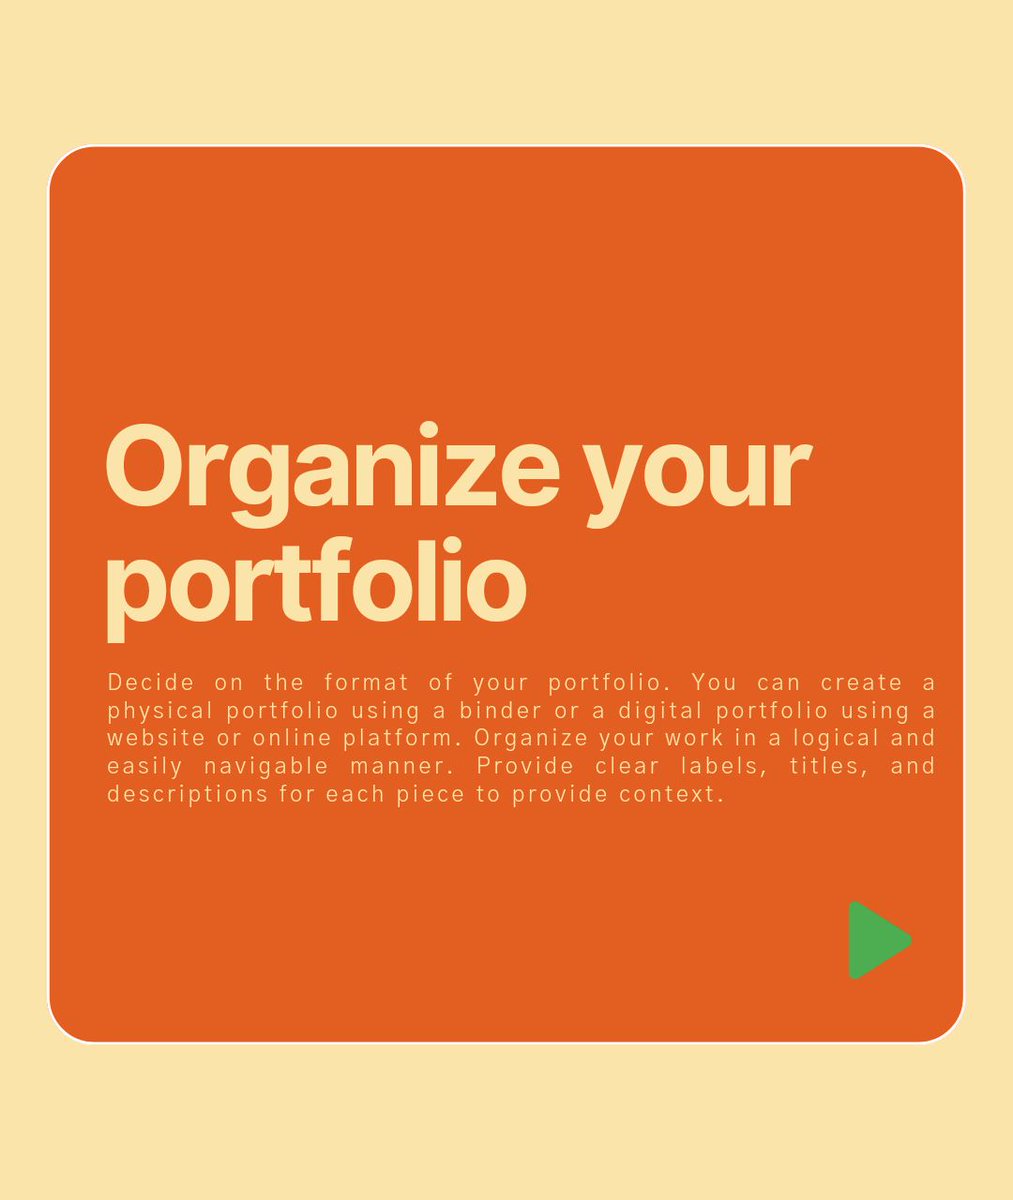 Mastering the Art of Portfolio Building 🎨📁 Your portfolio is more than a collection of work.

#PortfolioMastery #CareerCanvas #ShowcaseSuccess #CraftYourStory #ProfessionalImpact #SkillsShowcase